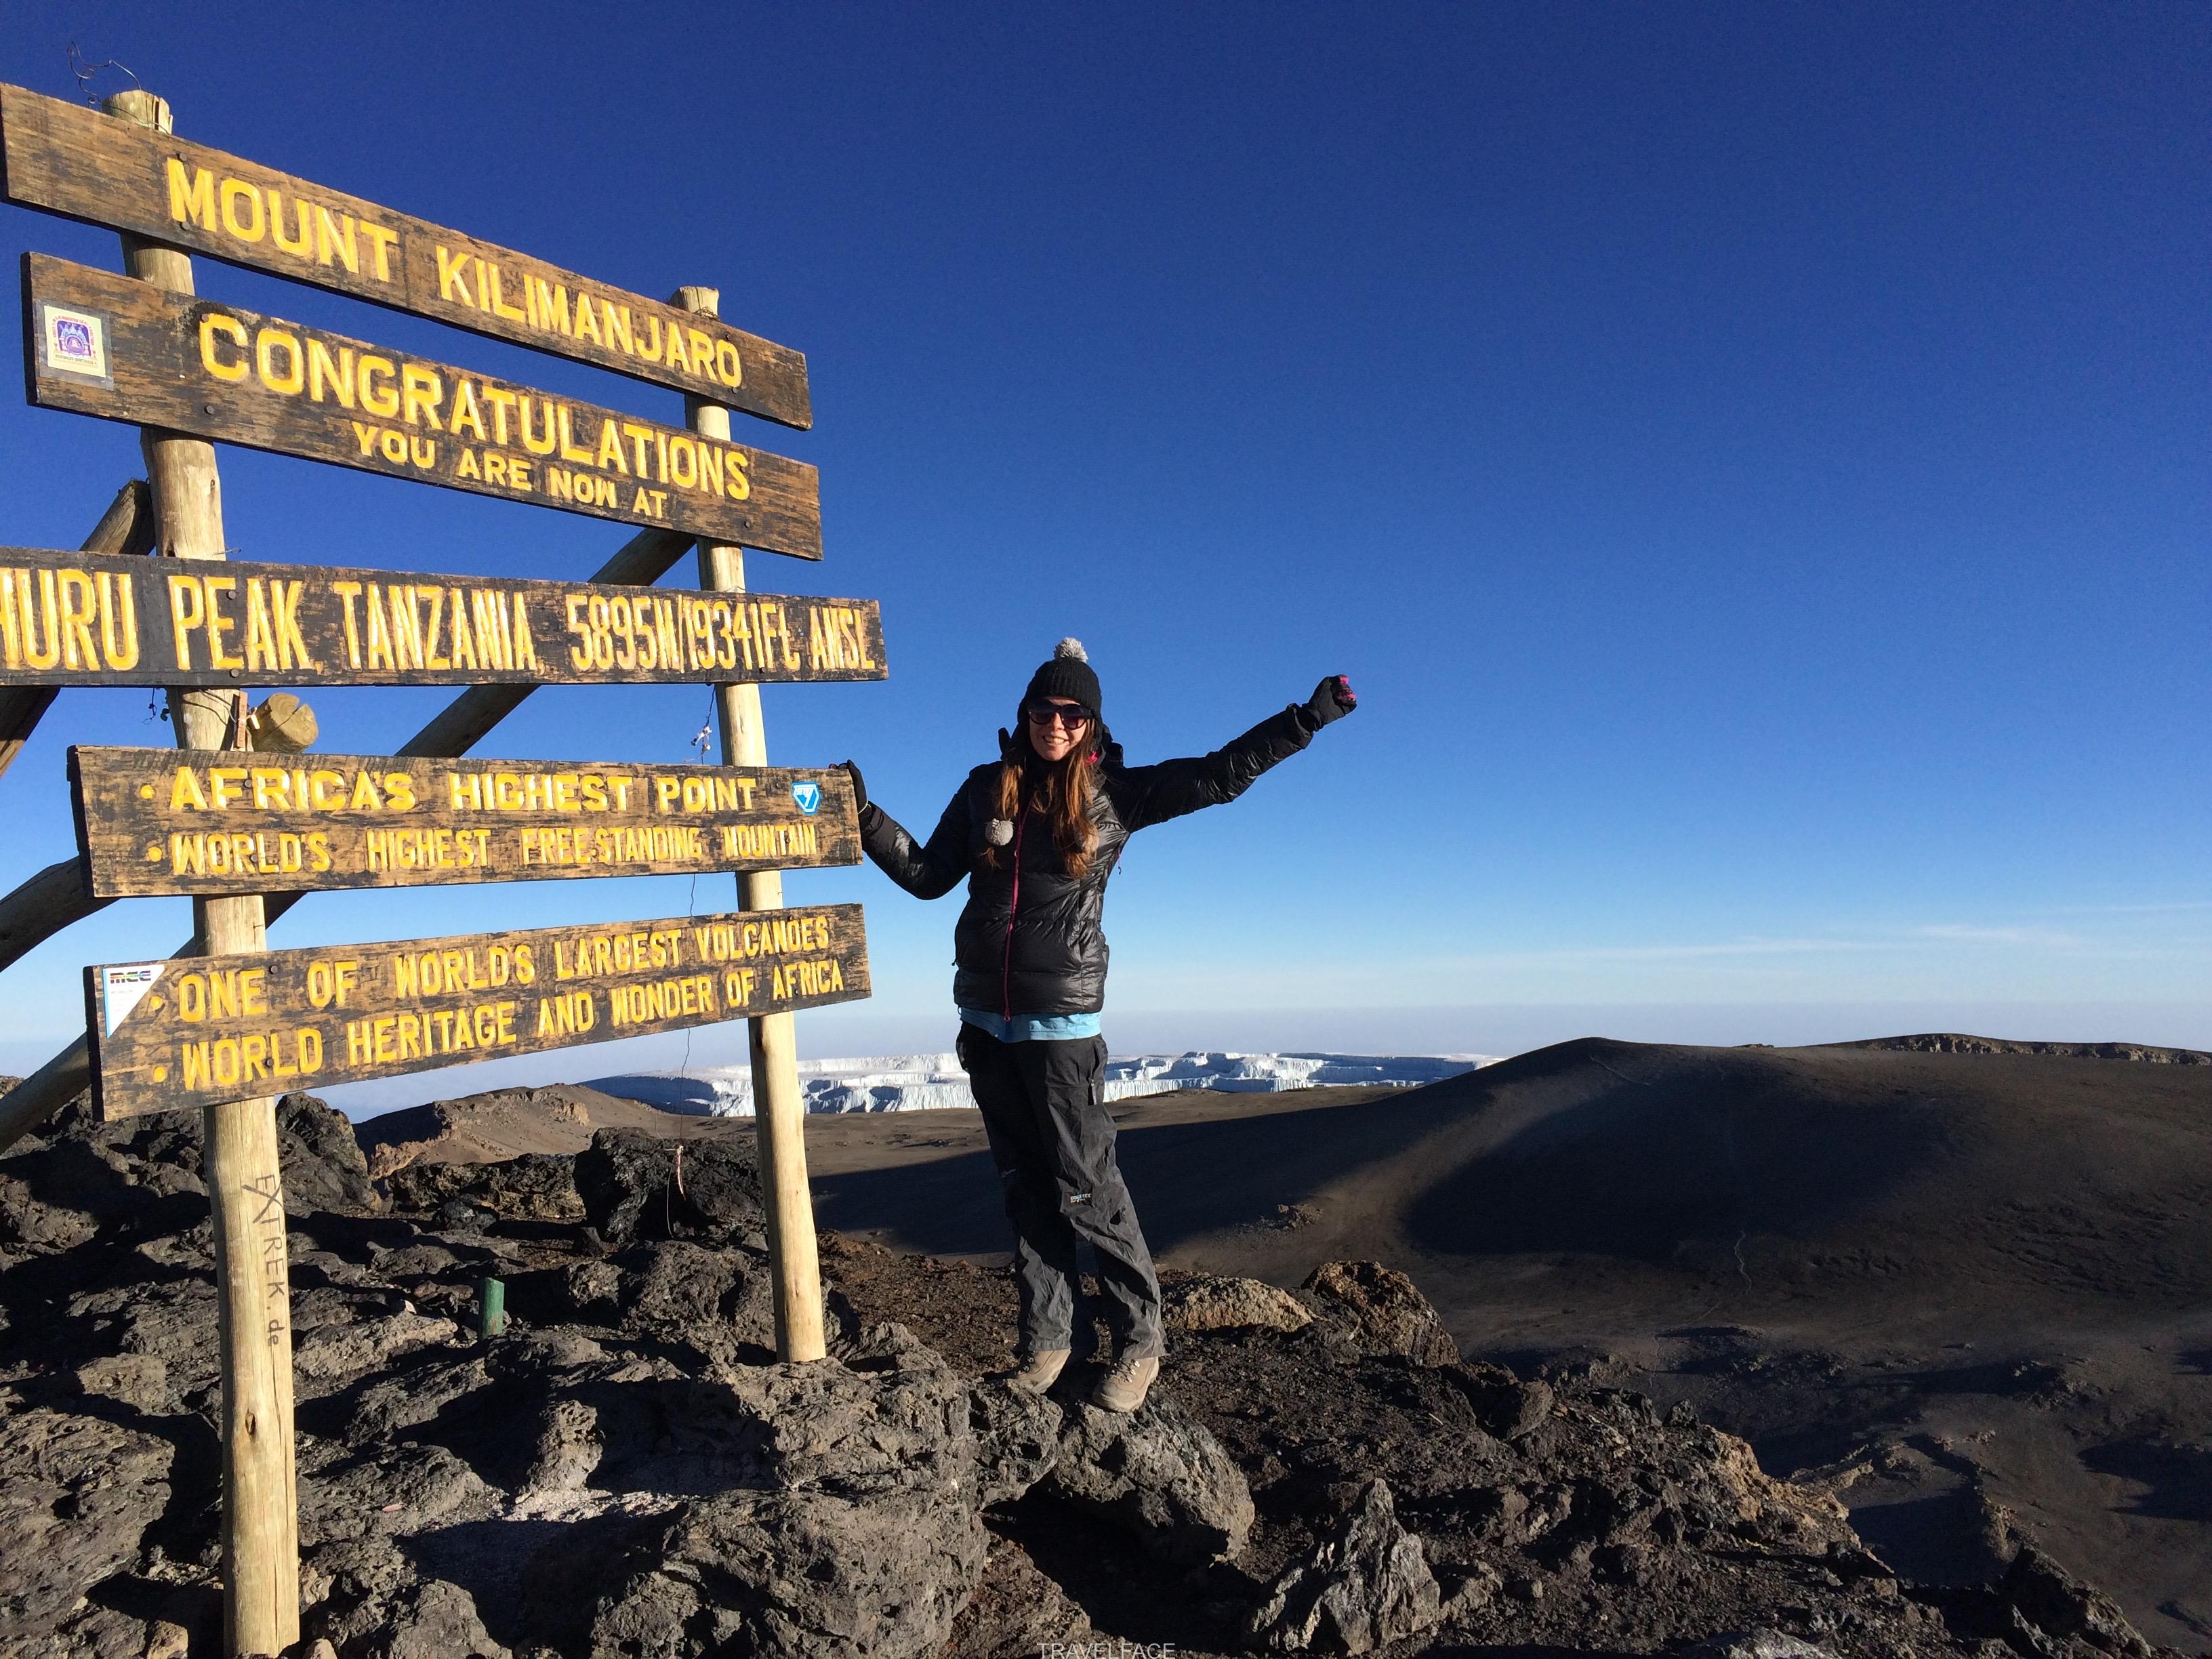 Kilimanjaro peak posing by the sign